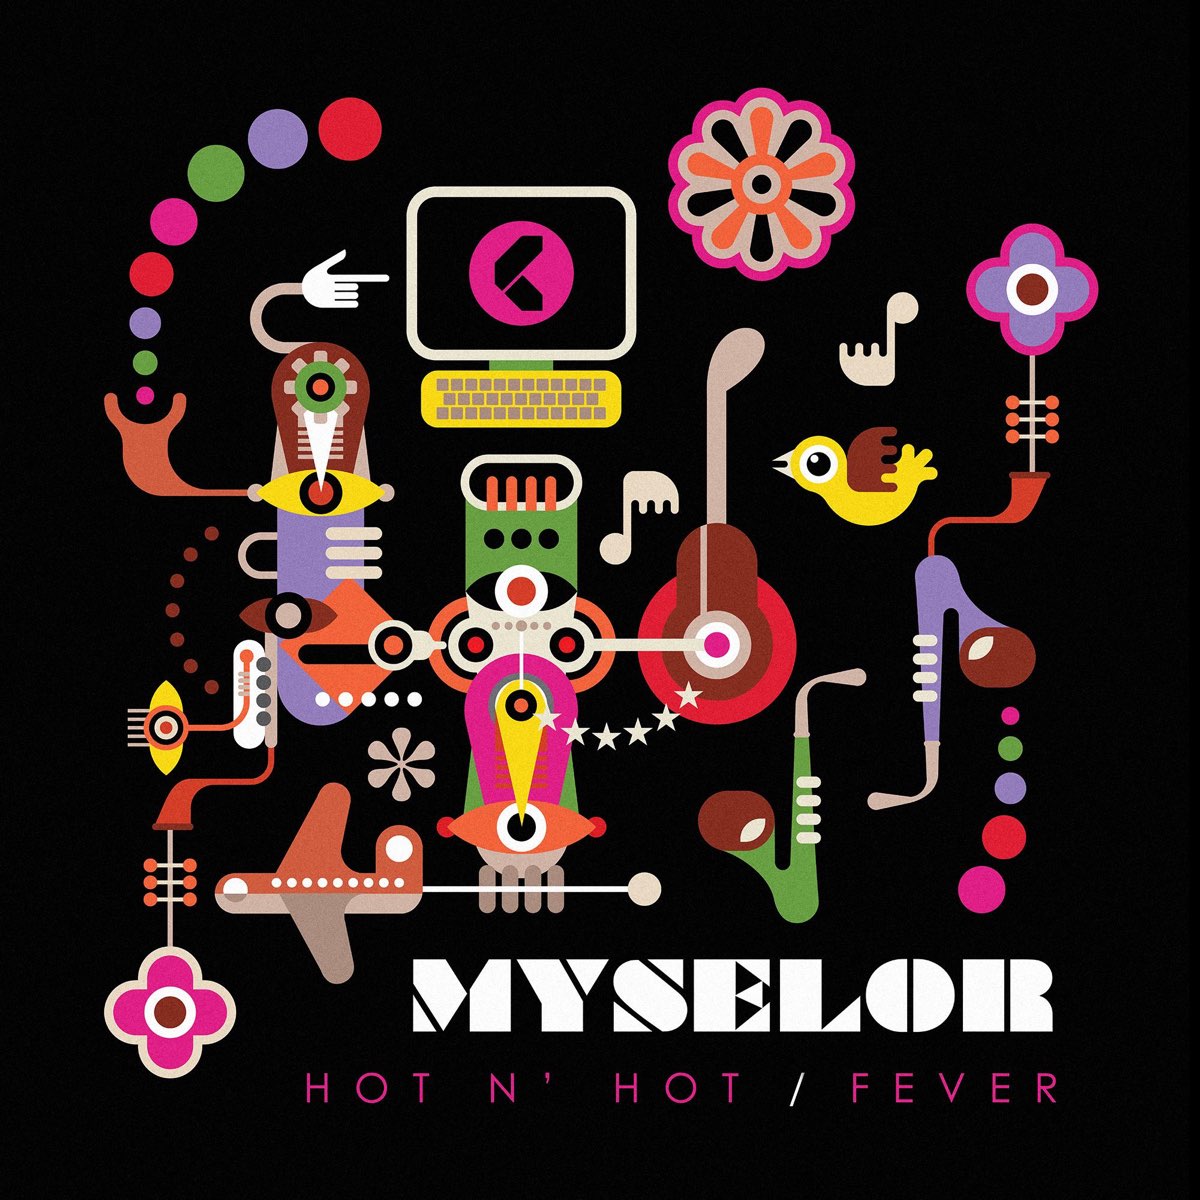 Hot original mix. Myselor. Myselor - Discovery. Myselor - Rebirth. Myselor - move on.